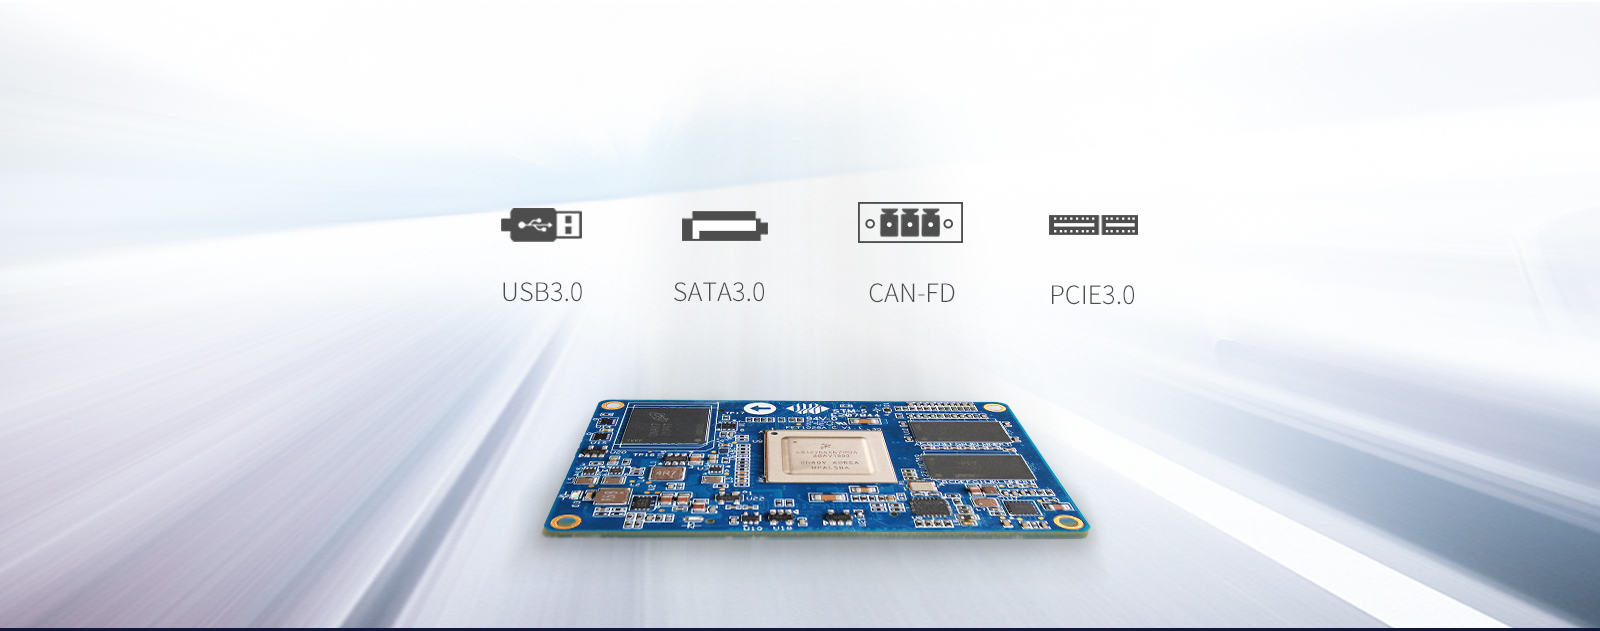 LS1028A USB3.0, SATA3.0, PCIe3.0, CAN FD 